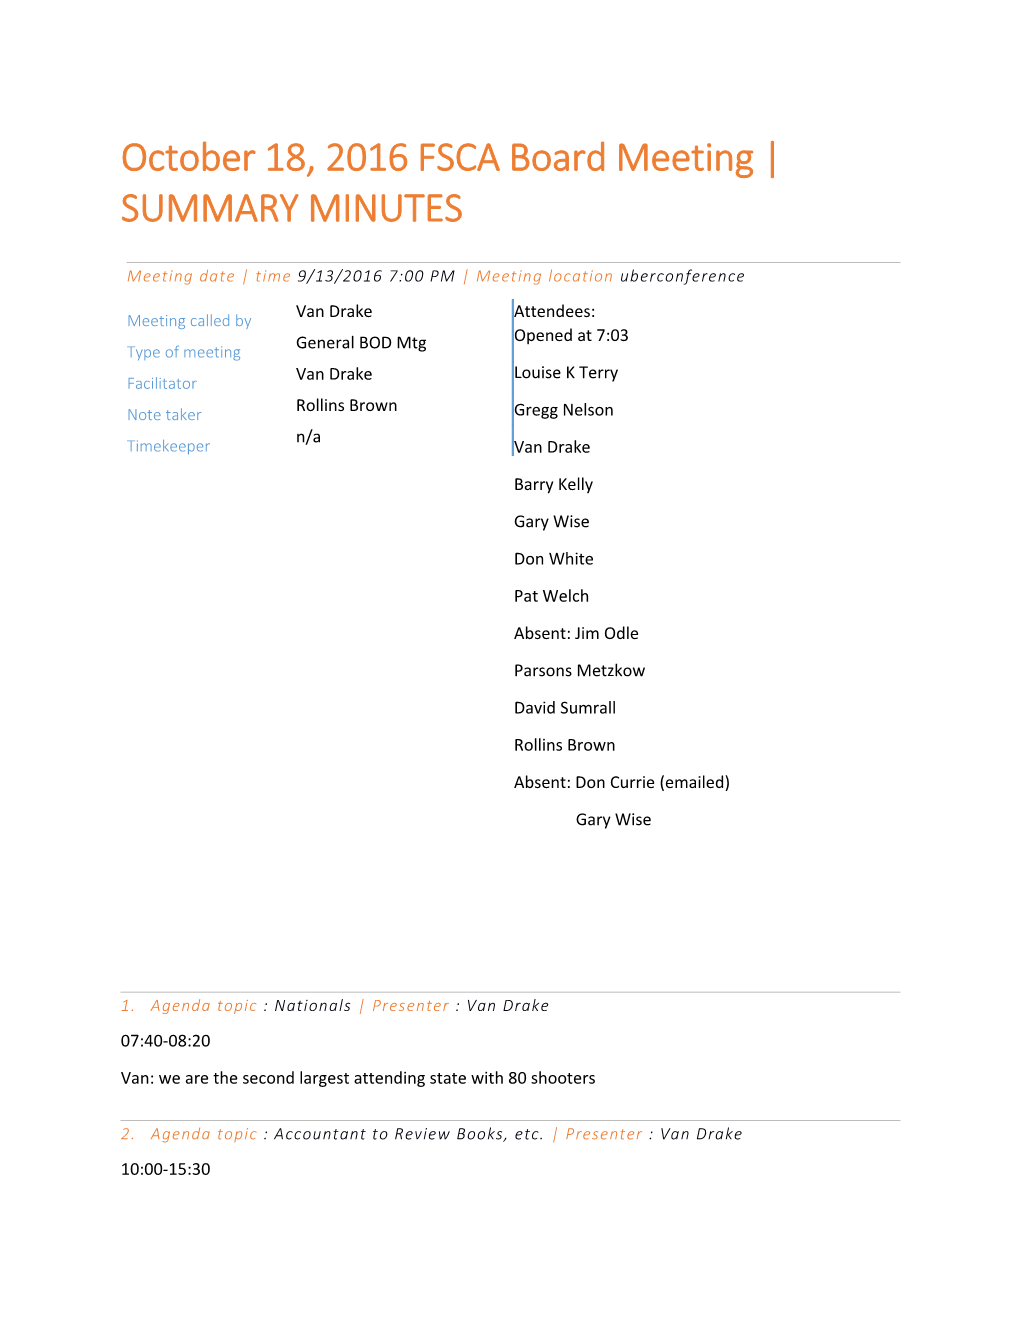 October 18, 2016 FSCA Board Meeting SUMMARY MINUTES